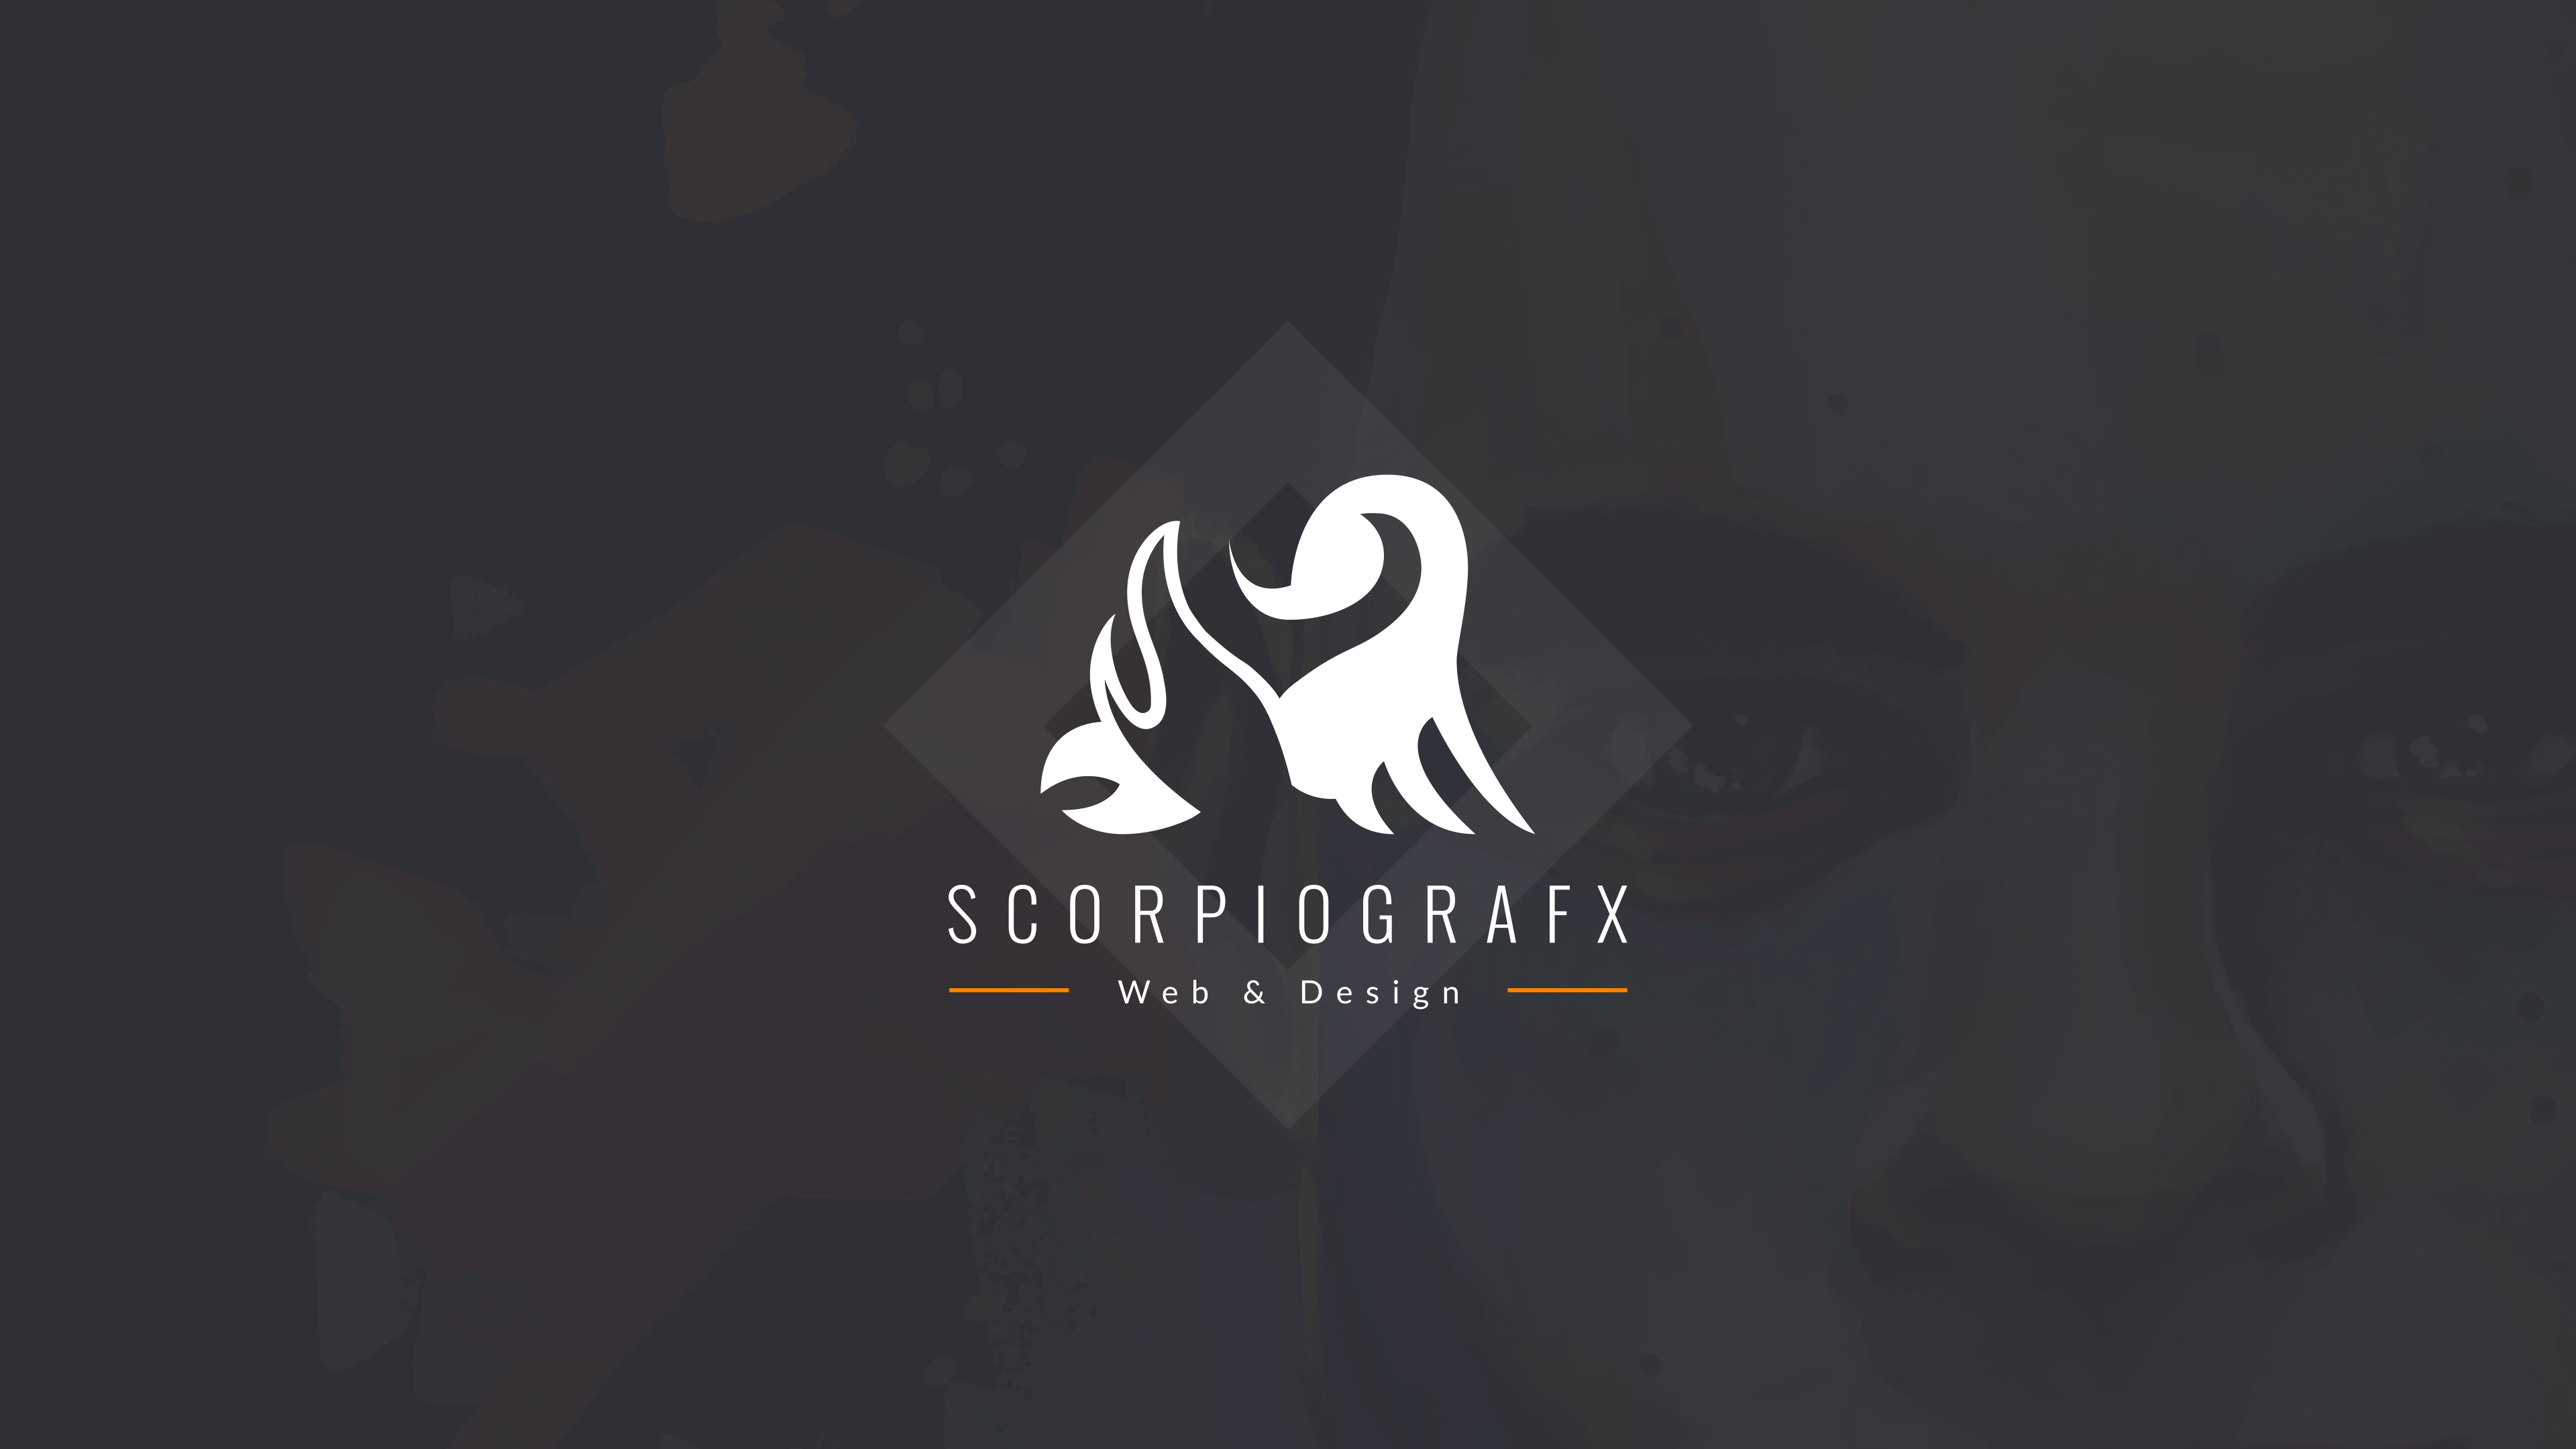 Scorpiografx